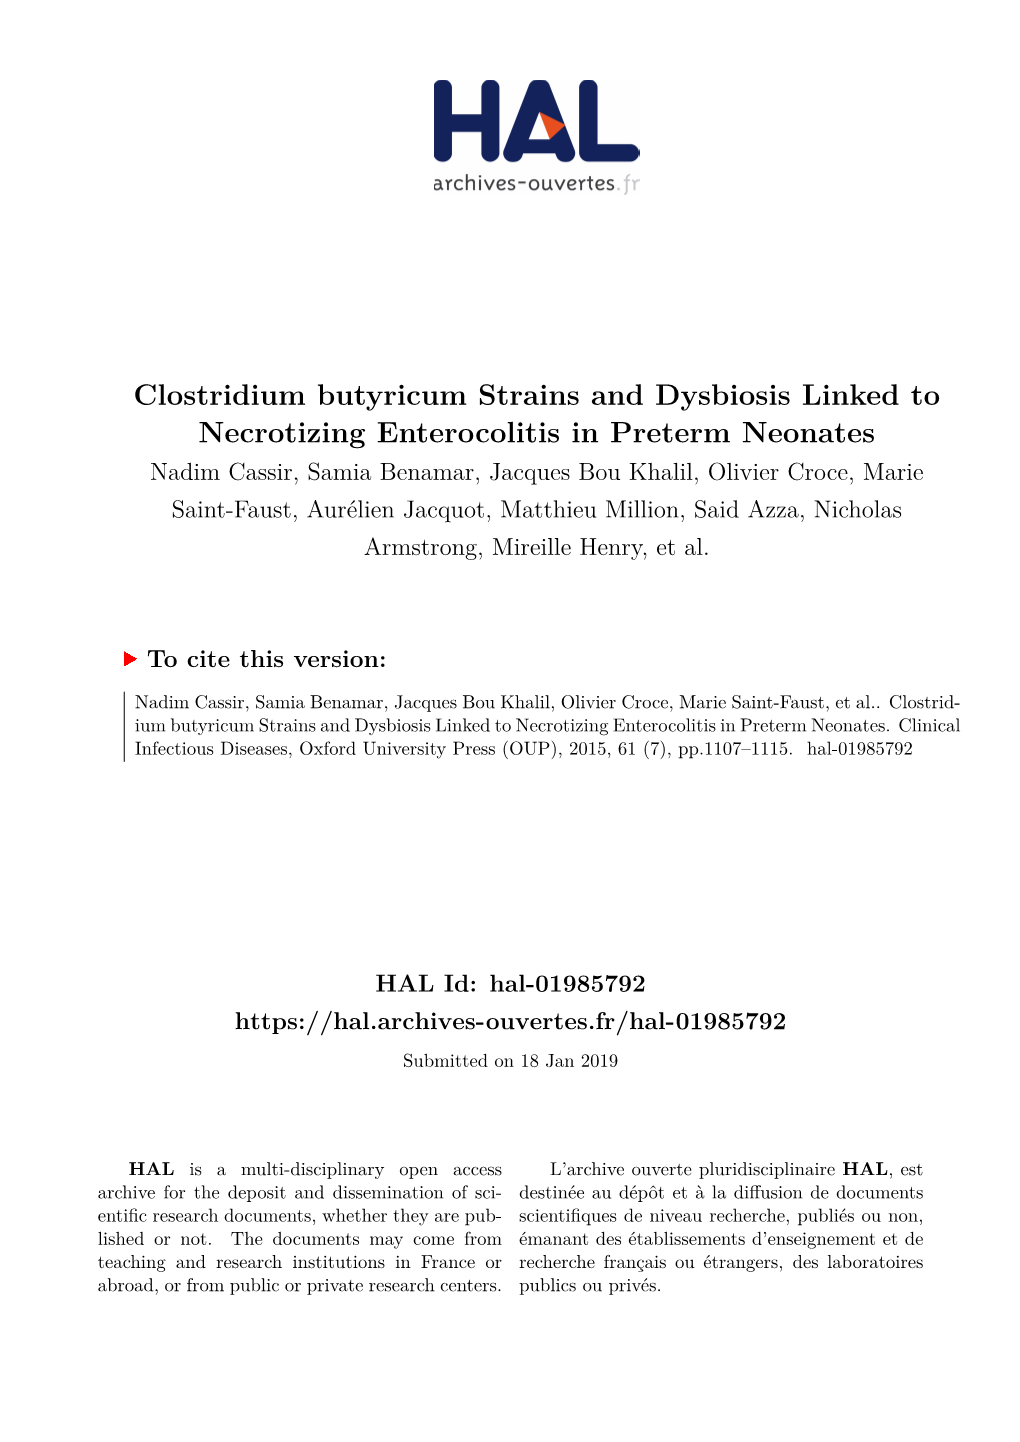 Clostridium Butyricum Strains and Dysbiosis Linked to Necrotizing